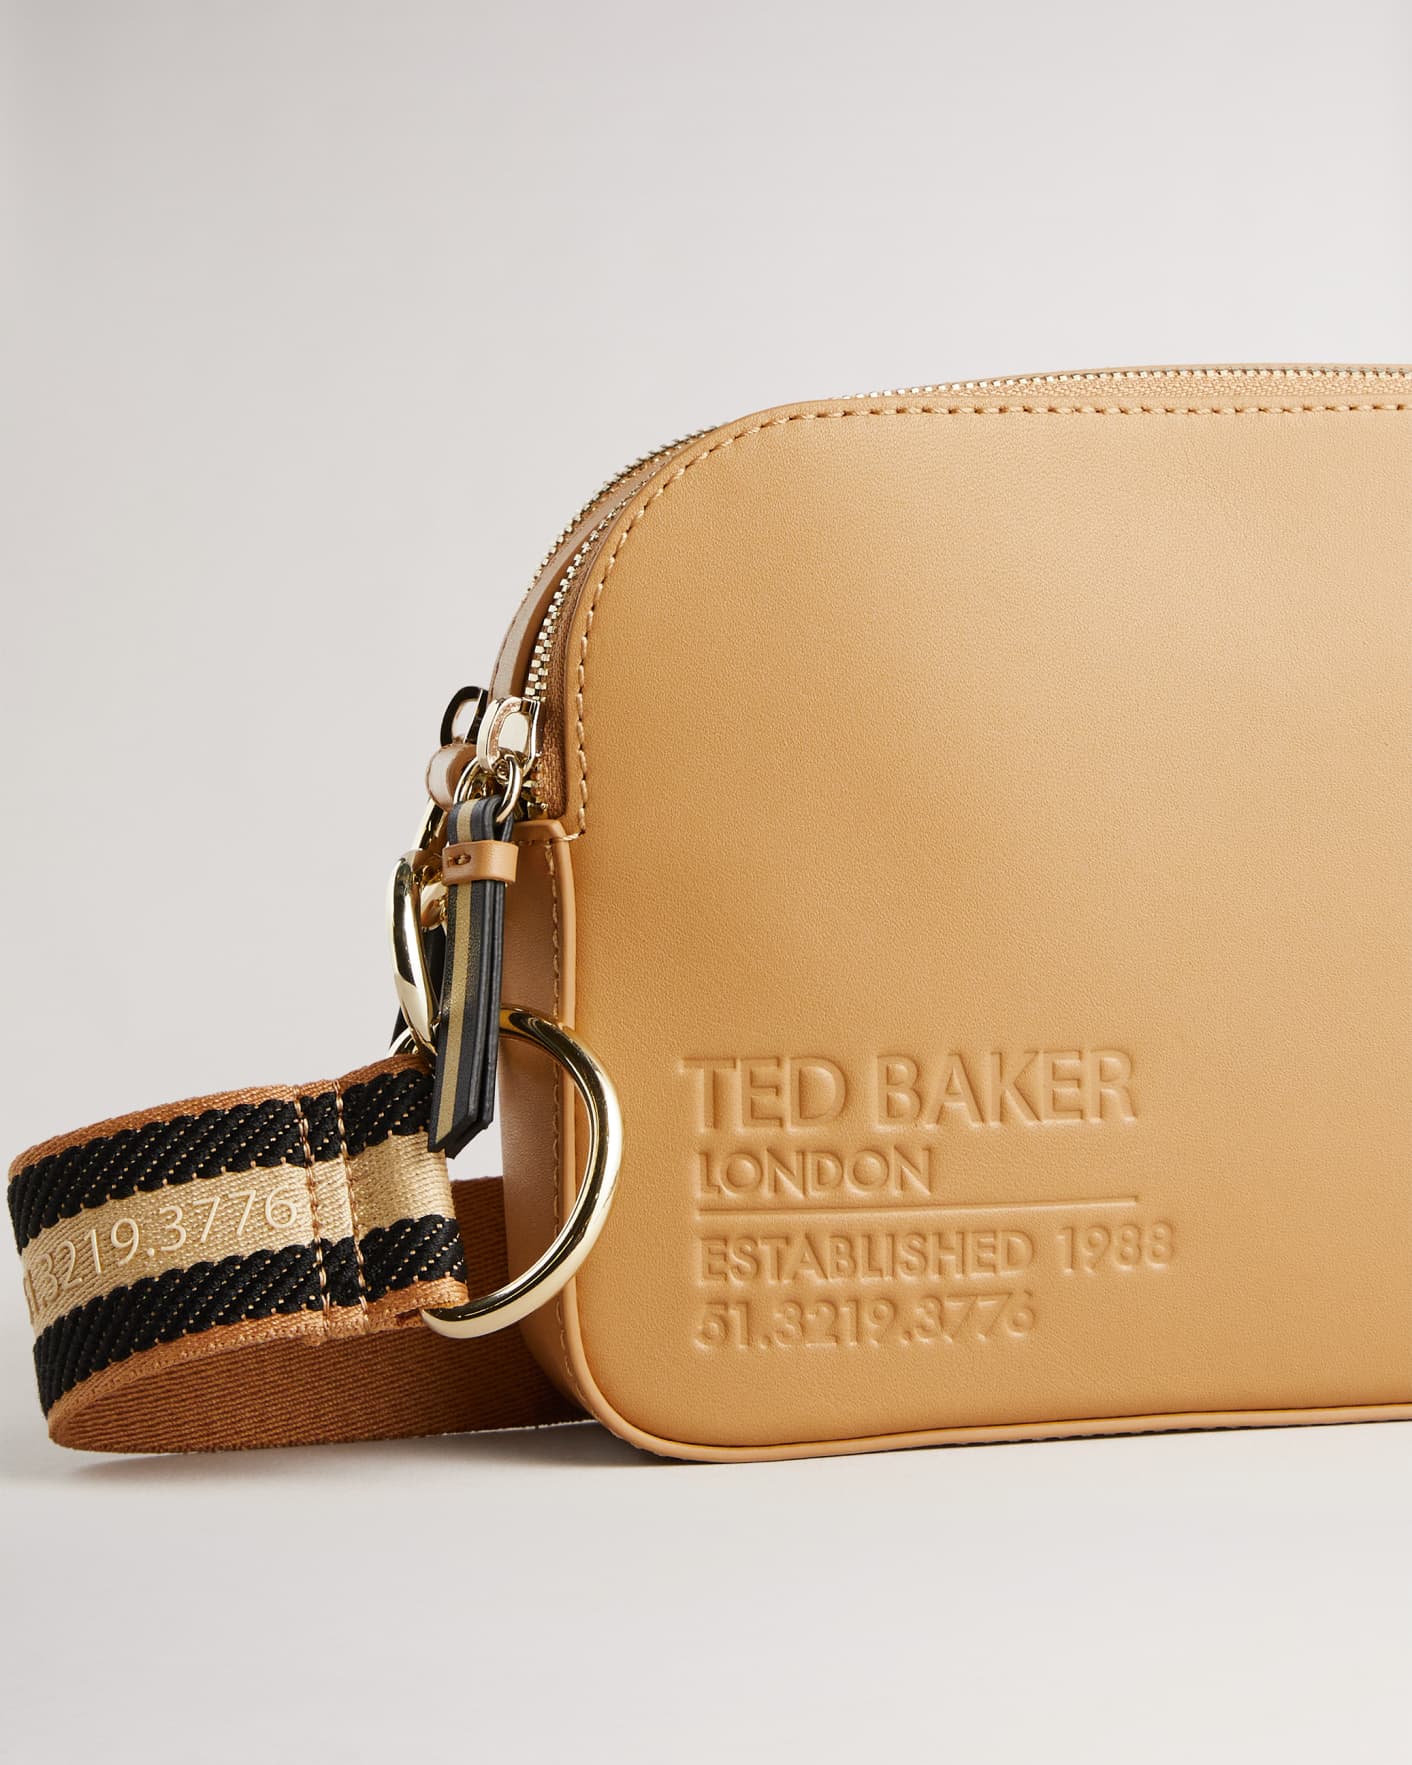 Chameau Petite sacoche en cuir style camera bag Ted Baker